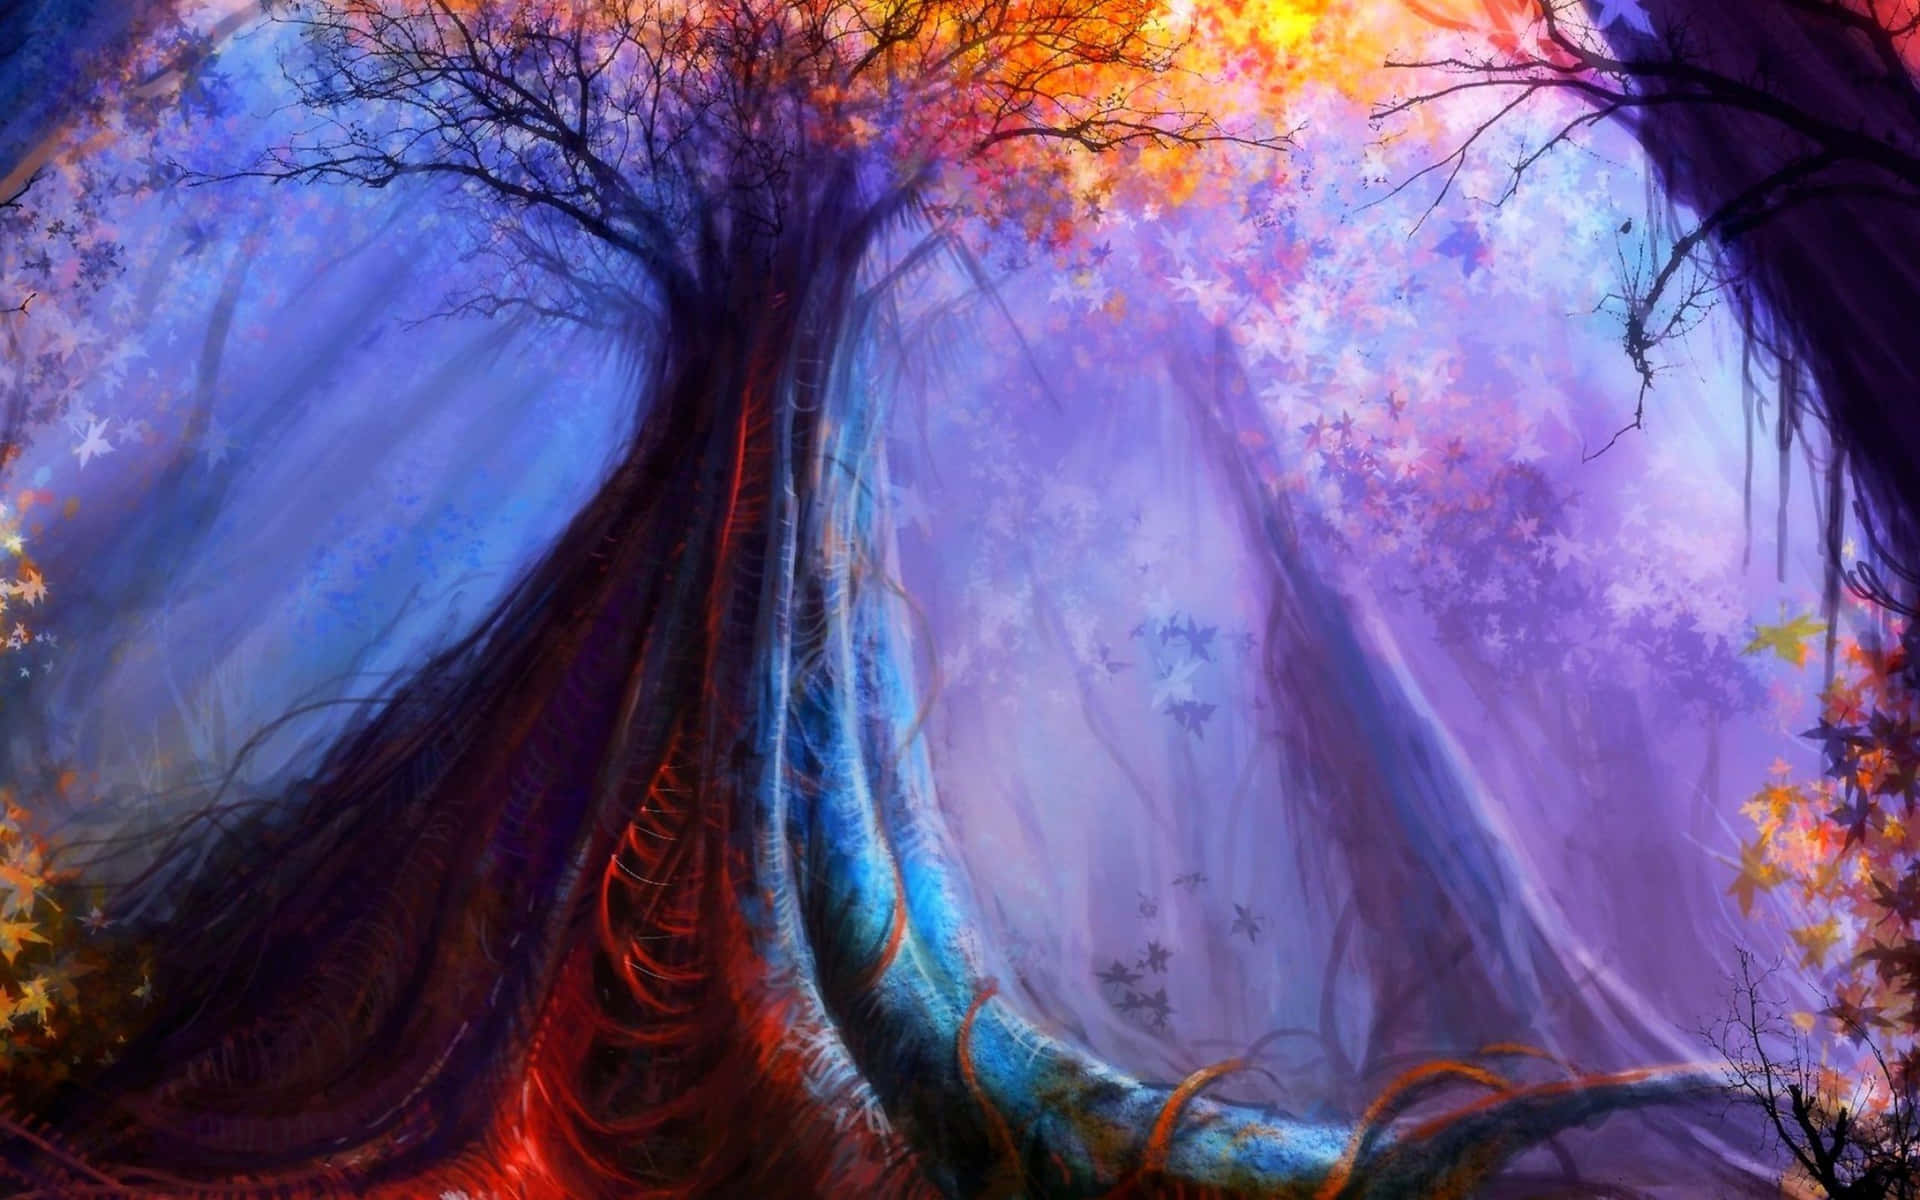 Enchanted Forest Abstract Art.jpg Wallpaper